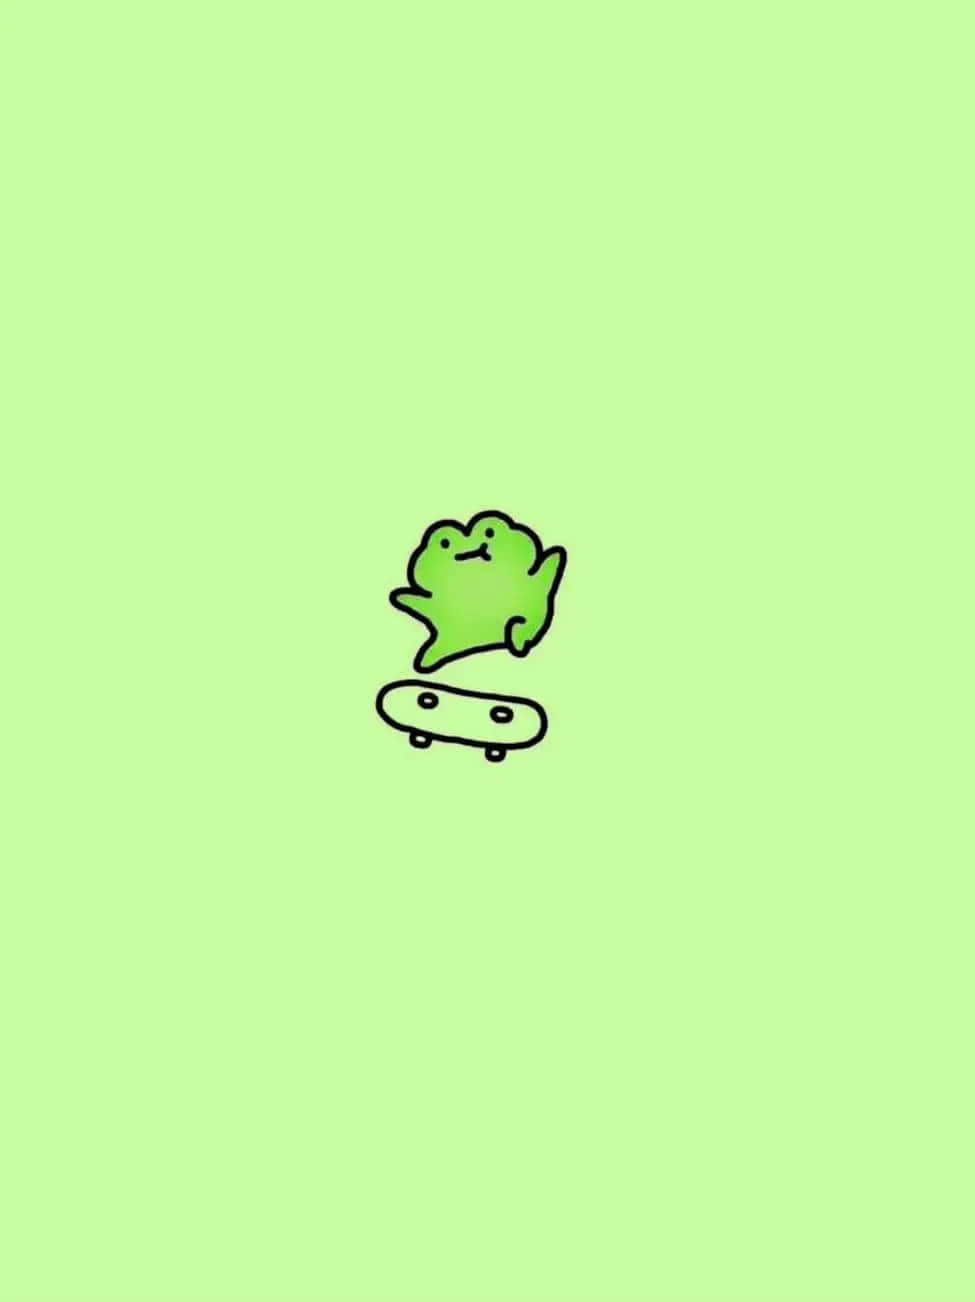 Green Frog Skateboarding Illustration Wallpaper